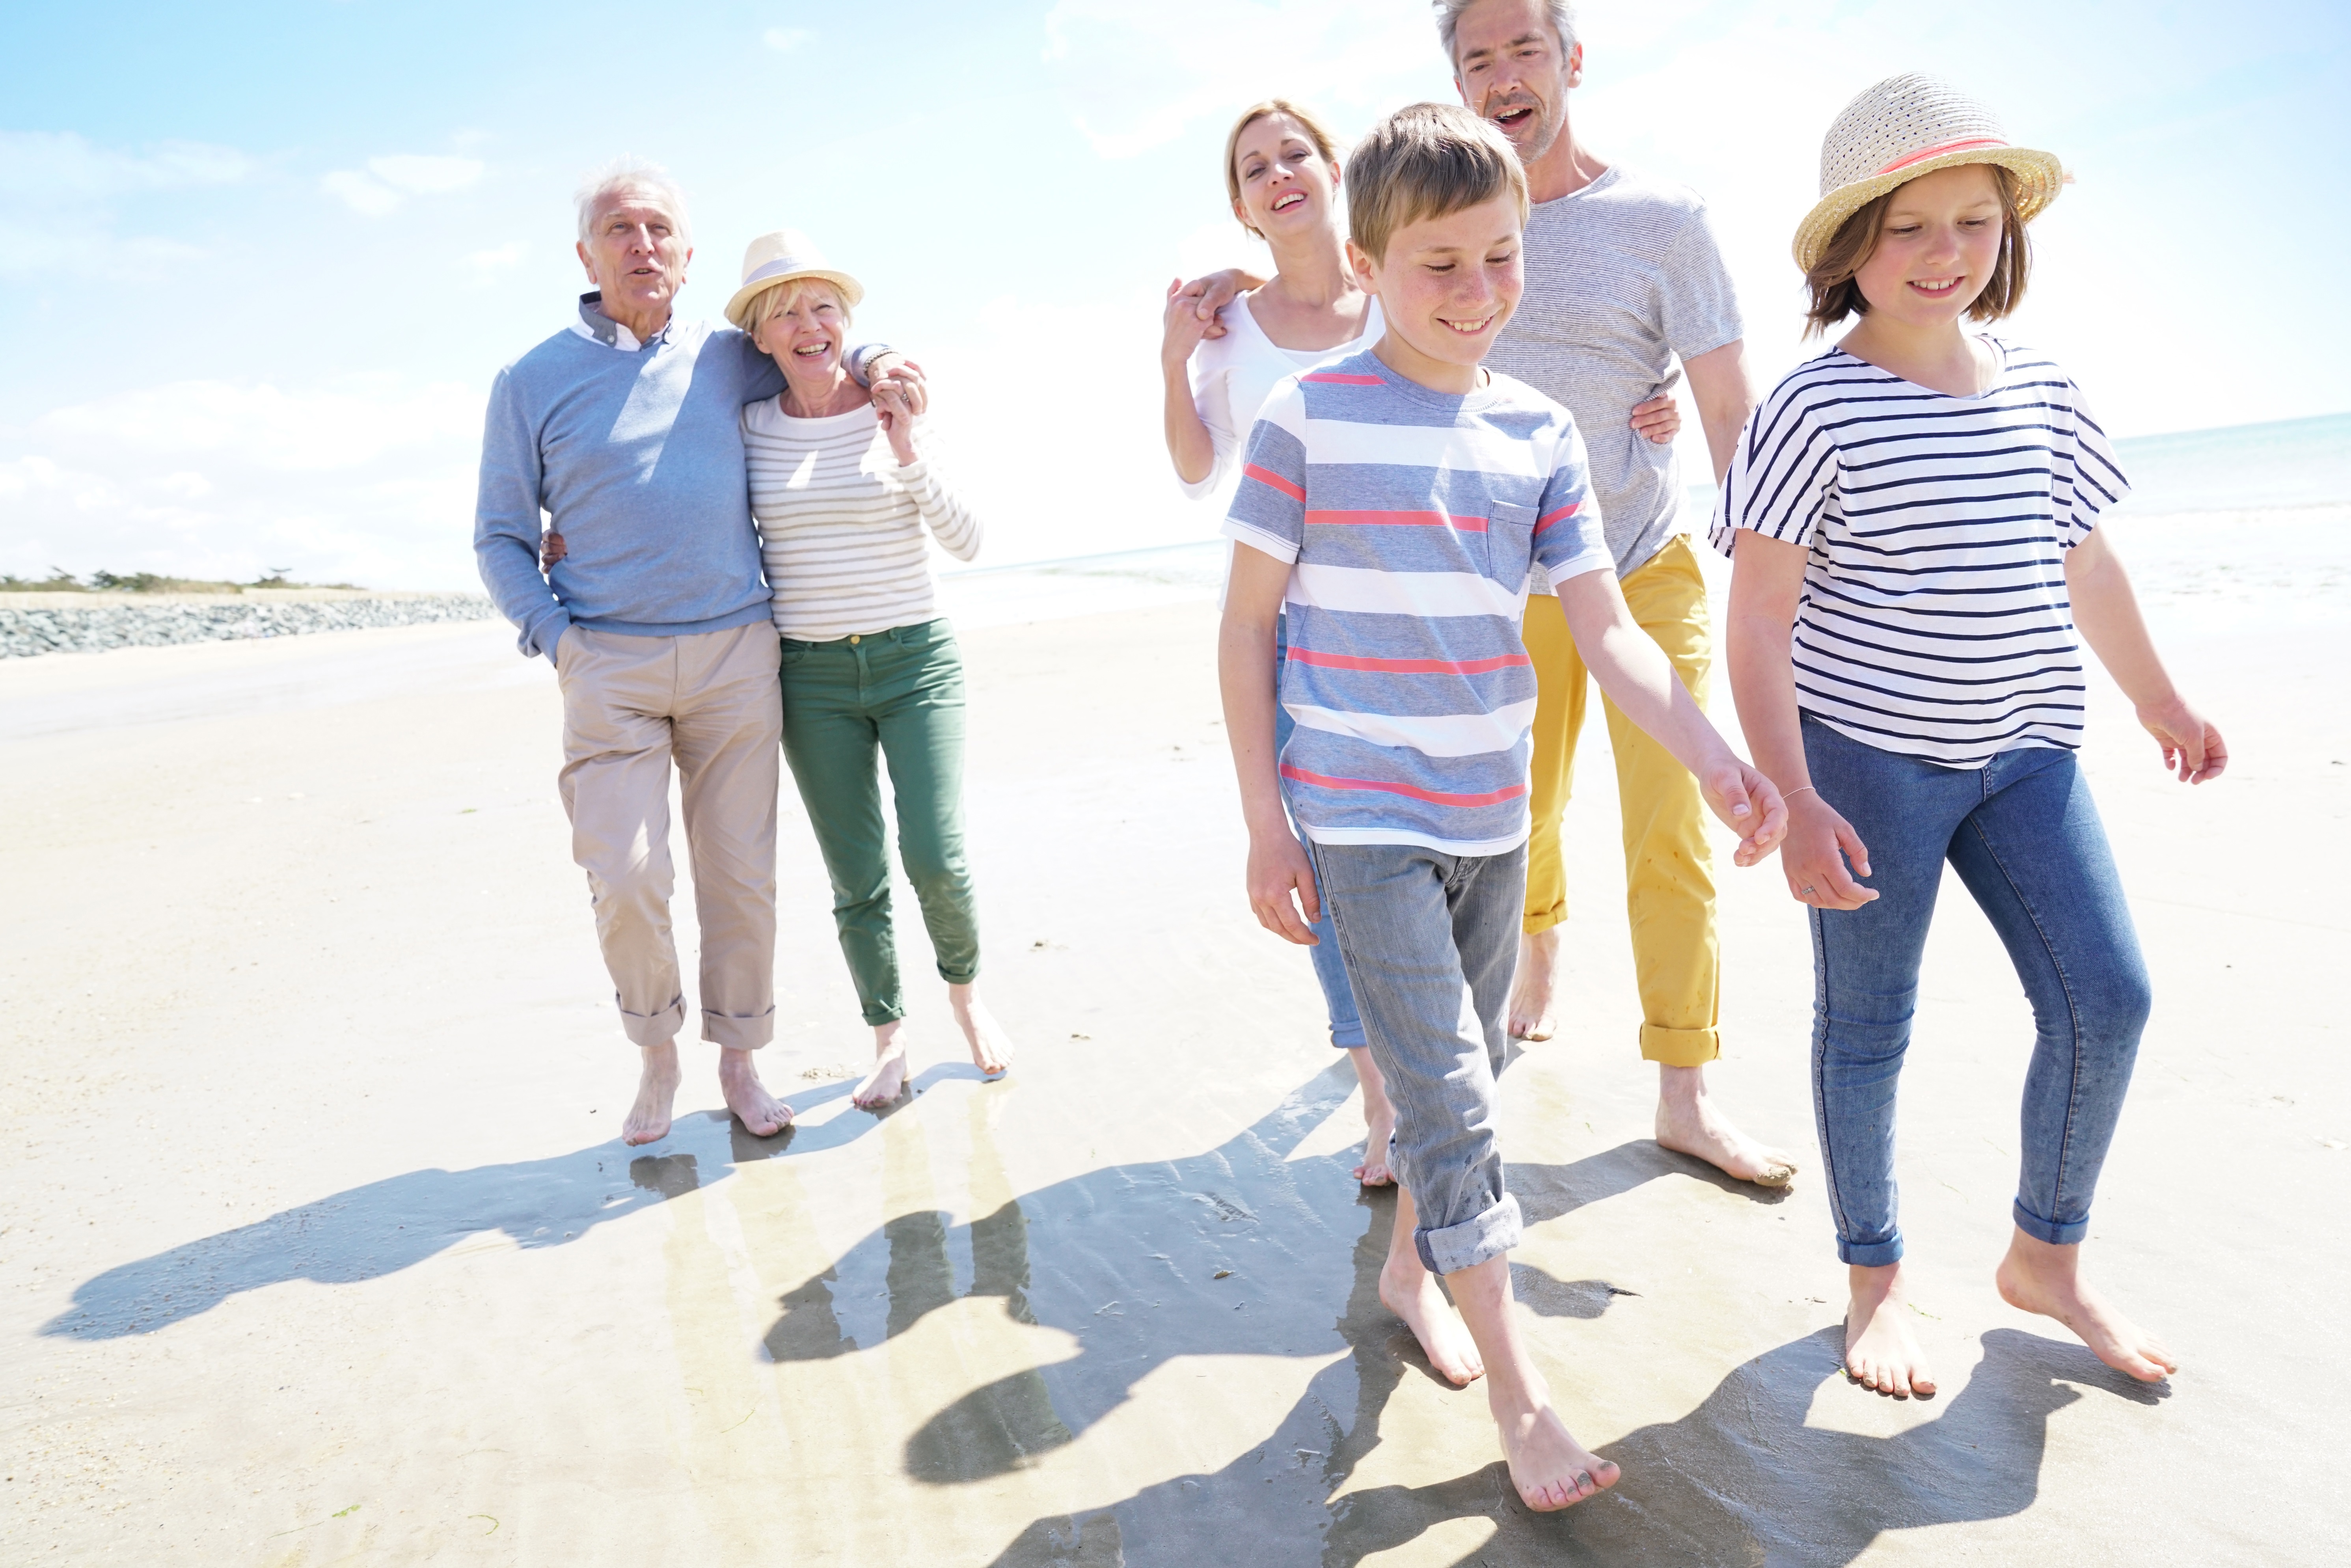 Three generations of a loving family enjoying a leisurely stroll on the beach